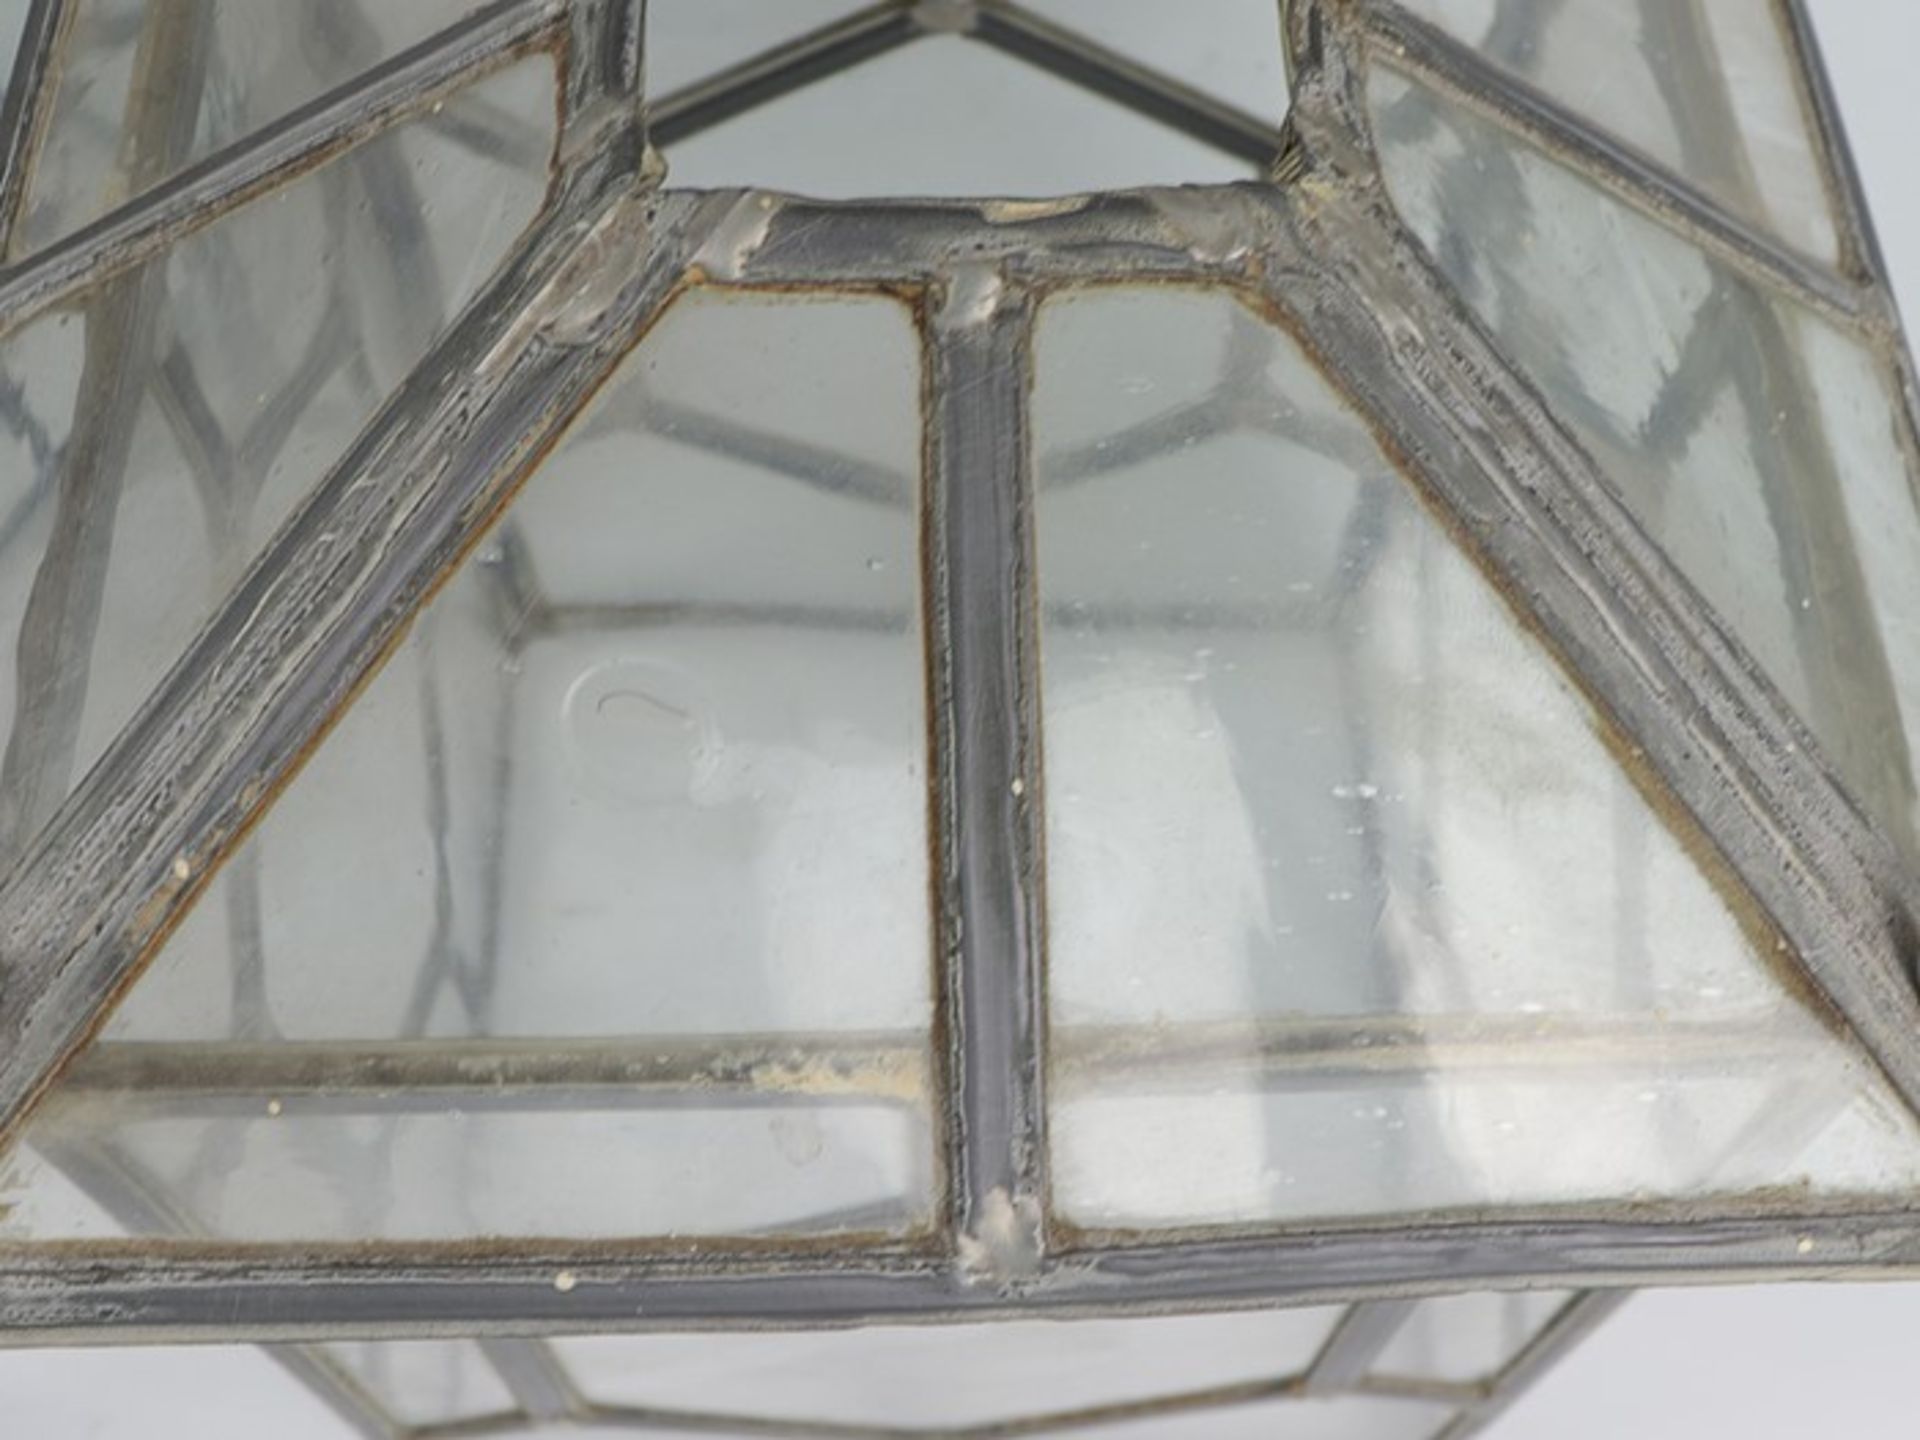 Deckenlaternen - PaarMetall/Glas, bleiverglaster Korpus, gitterförmiger polygonaler Bleidekor, - Image 3 of 4